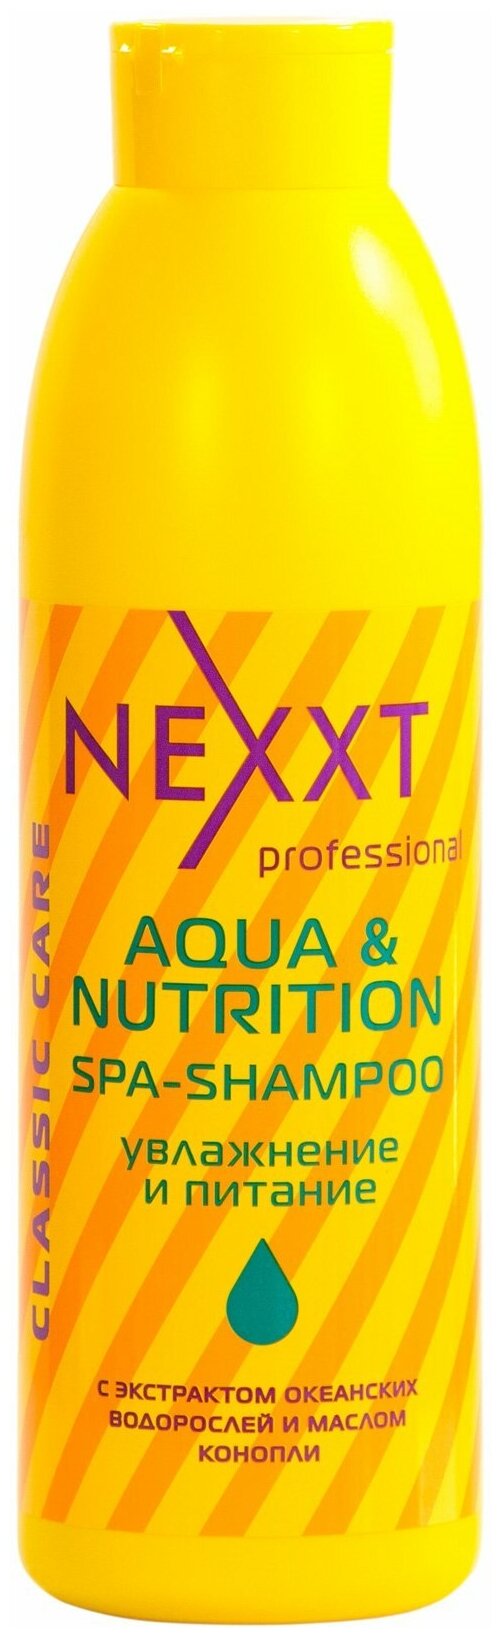 NEXXT спа-шампунь Professional Classic Care Aqua & Nutrition увлажнение и питание 1000 мл